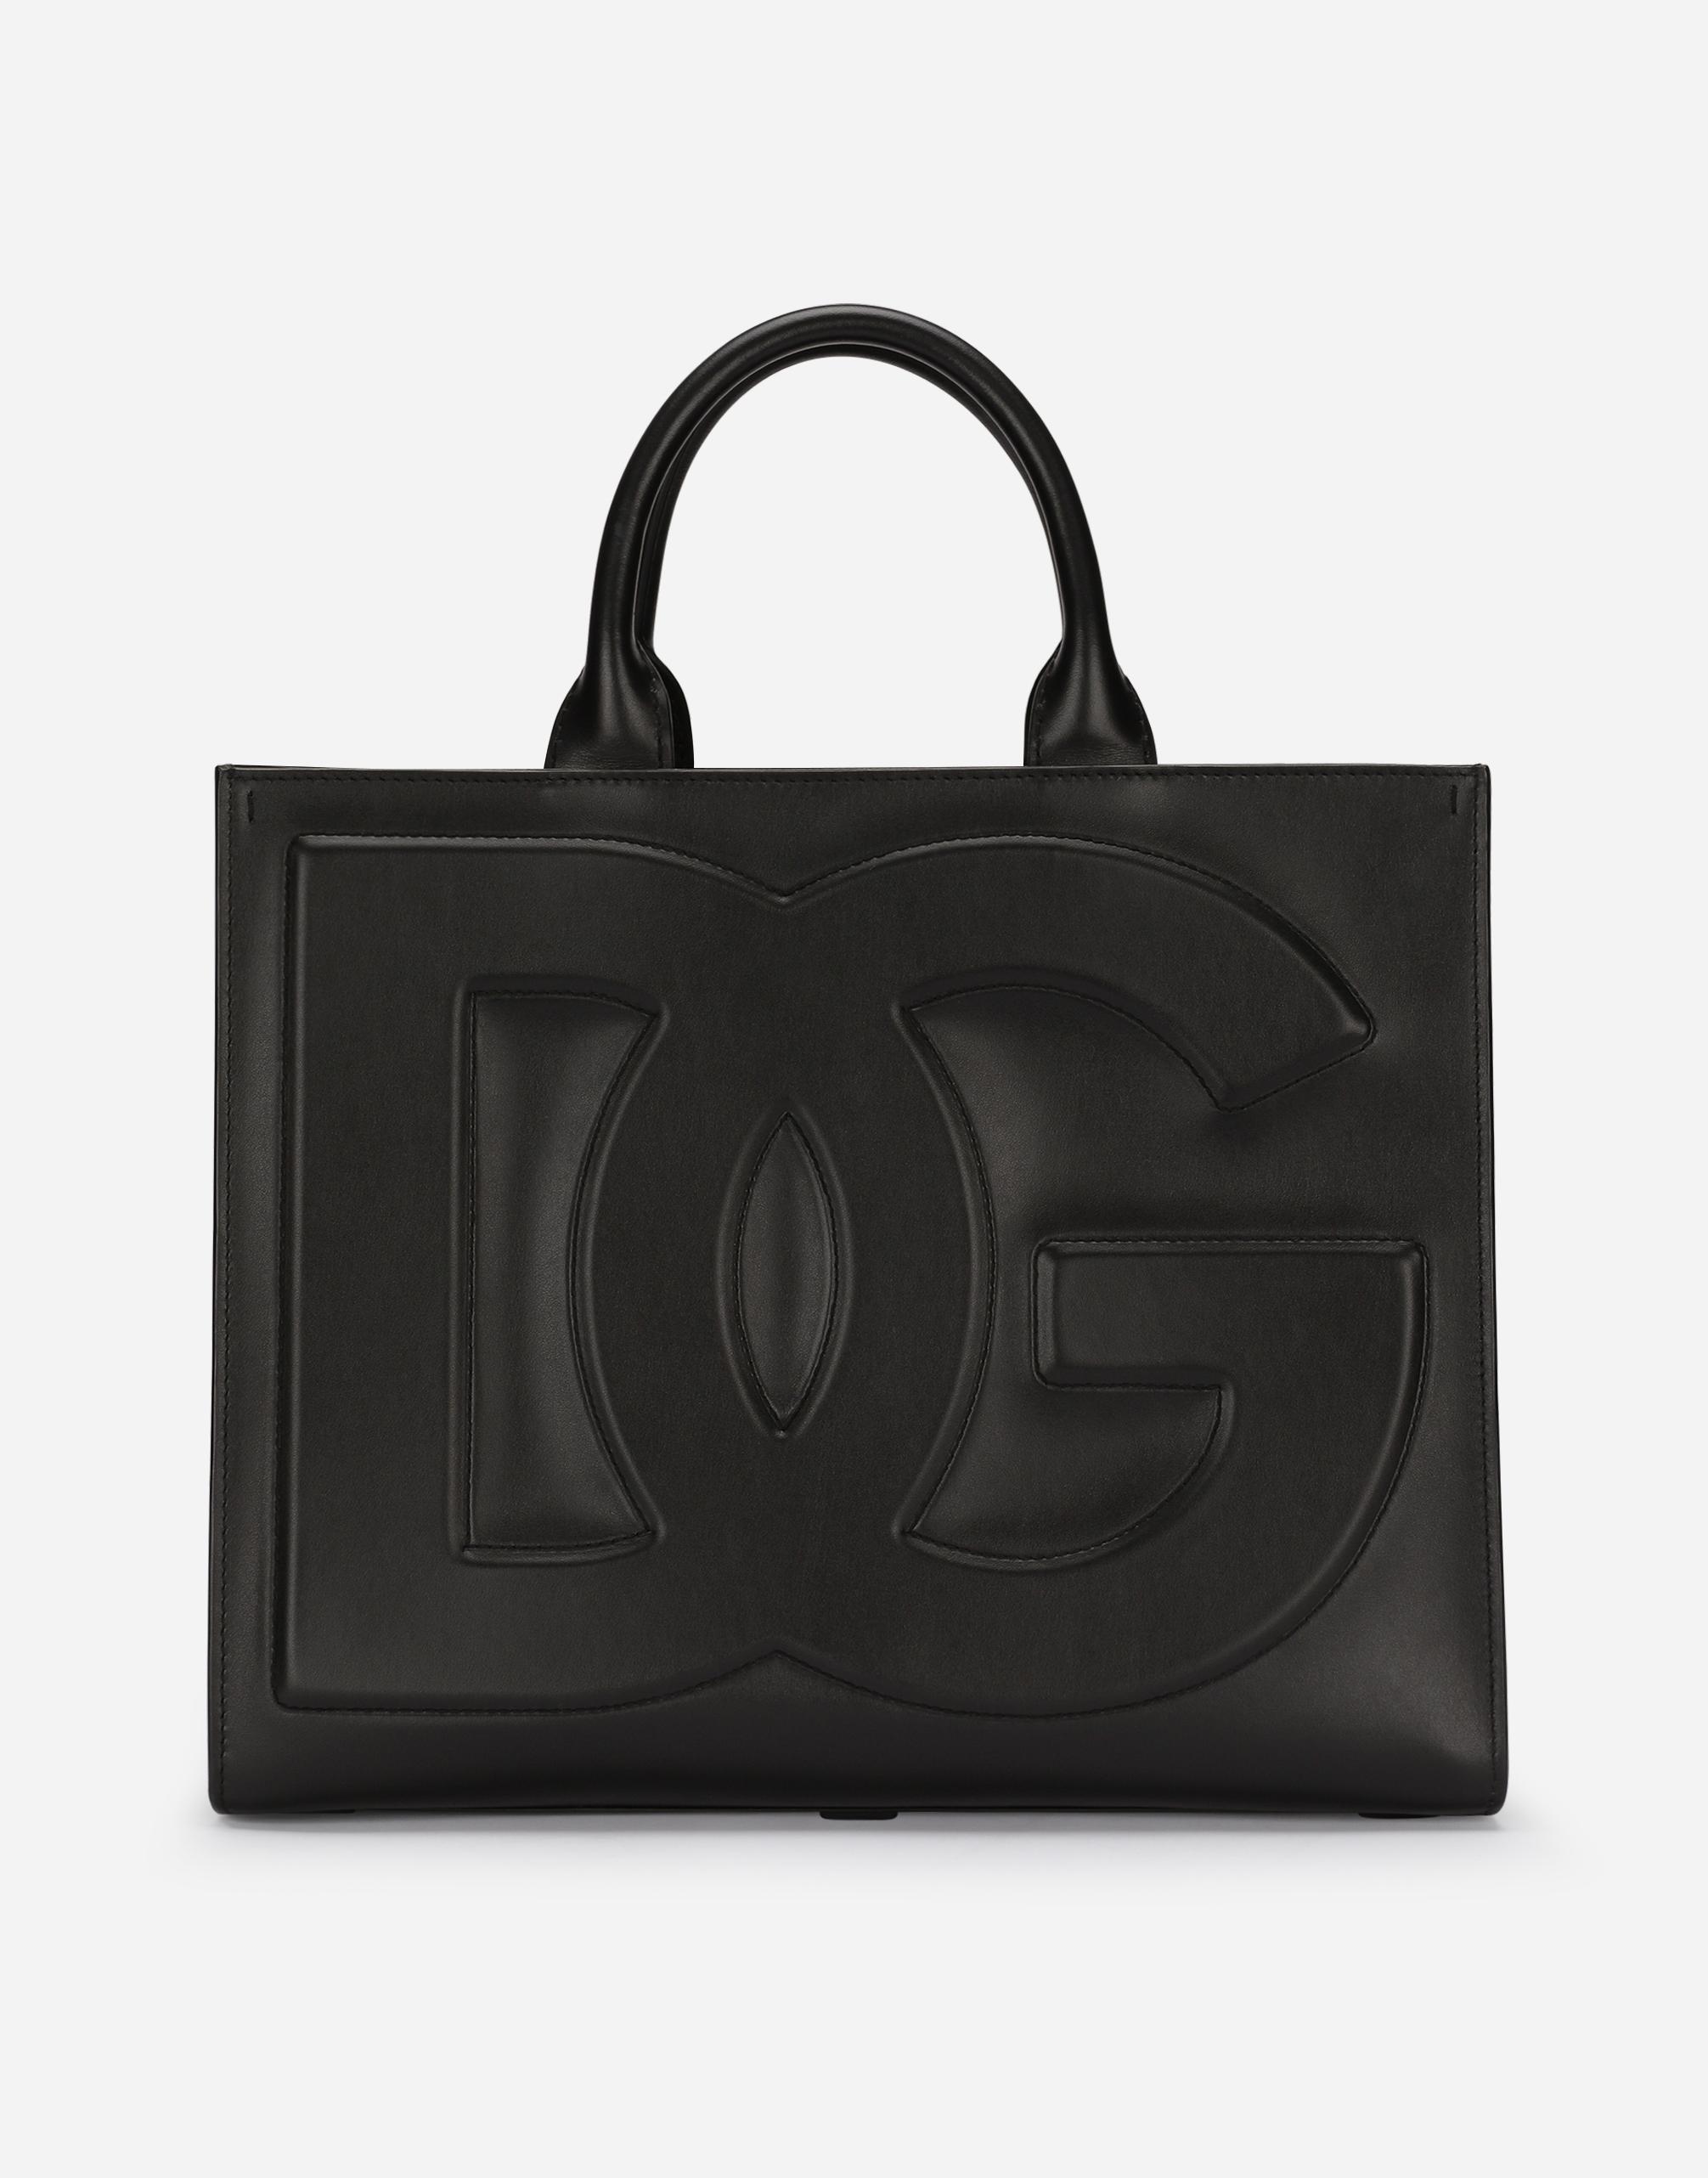 Dolce & Gabbana Dg Daily Medium Leather Tote in Black